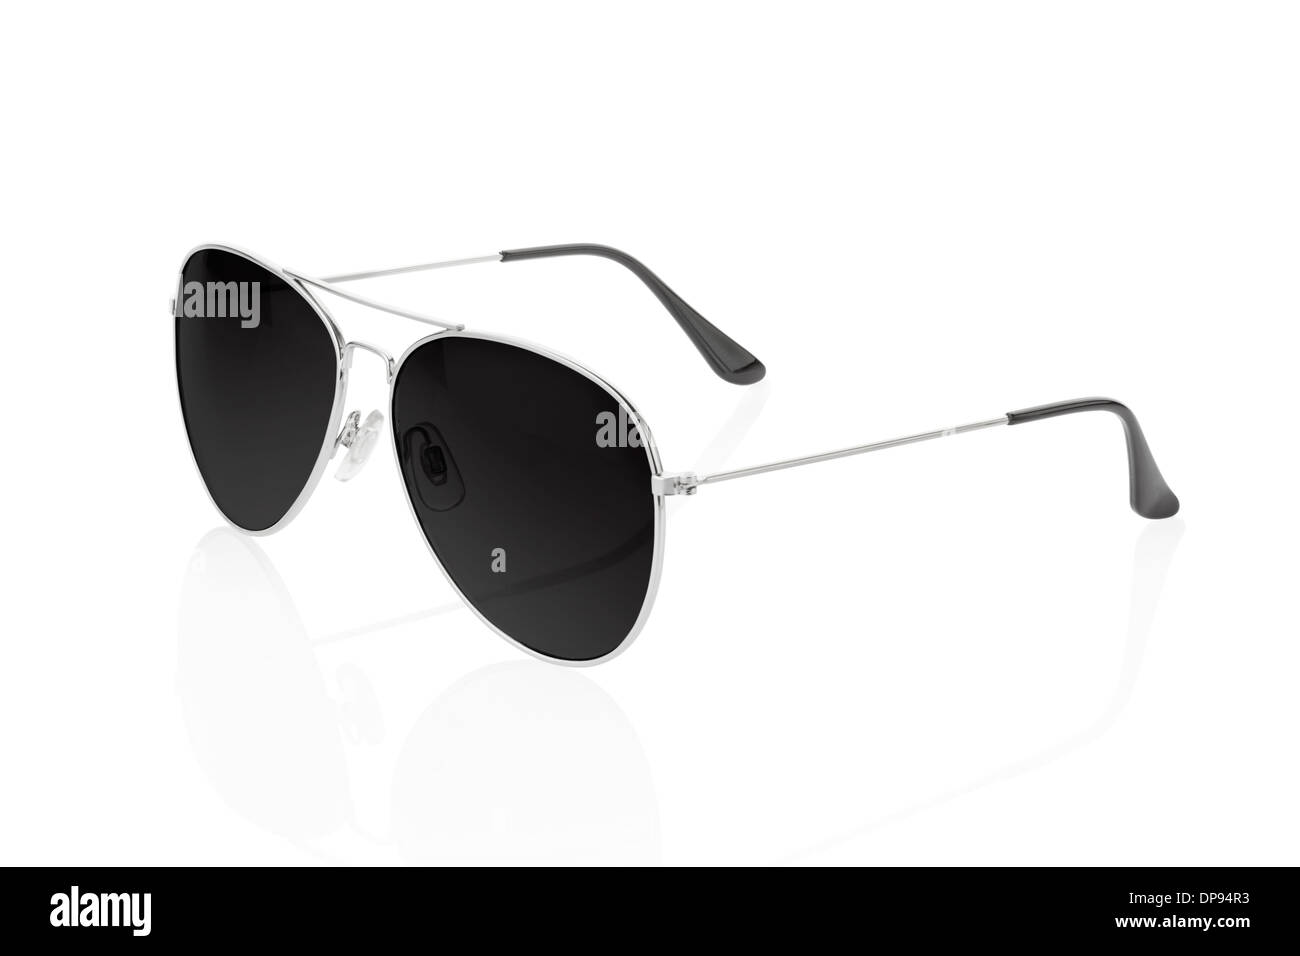 Sunglasses on white Stock Photo